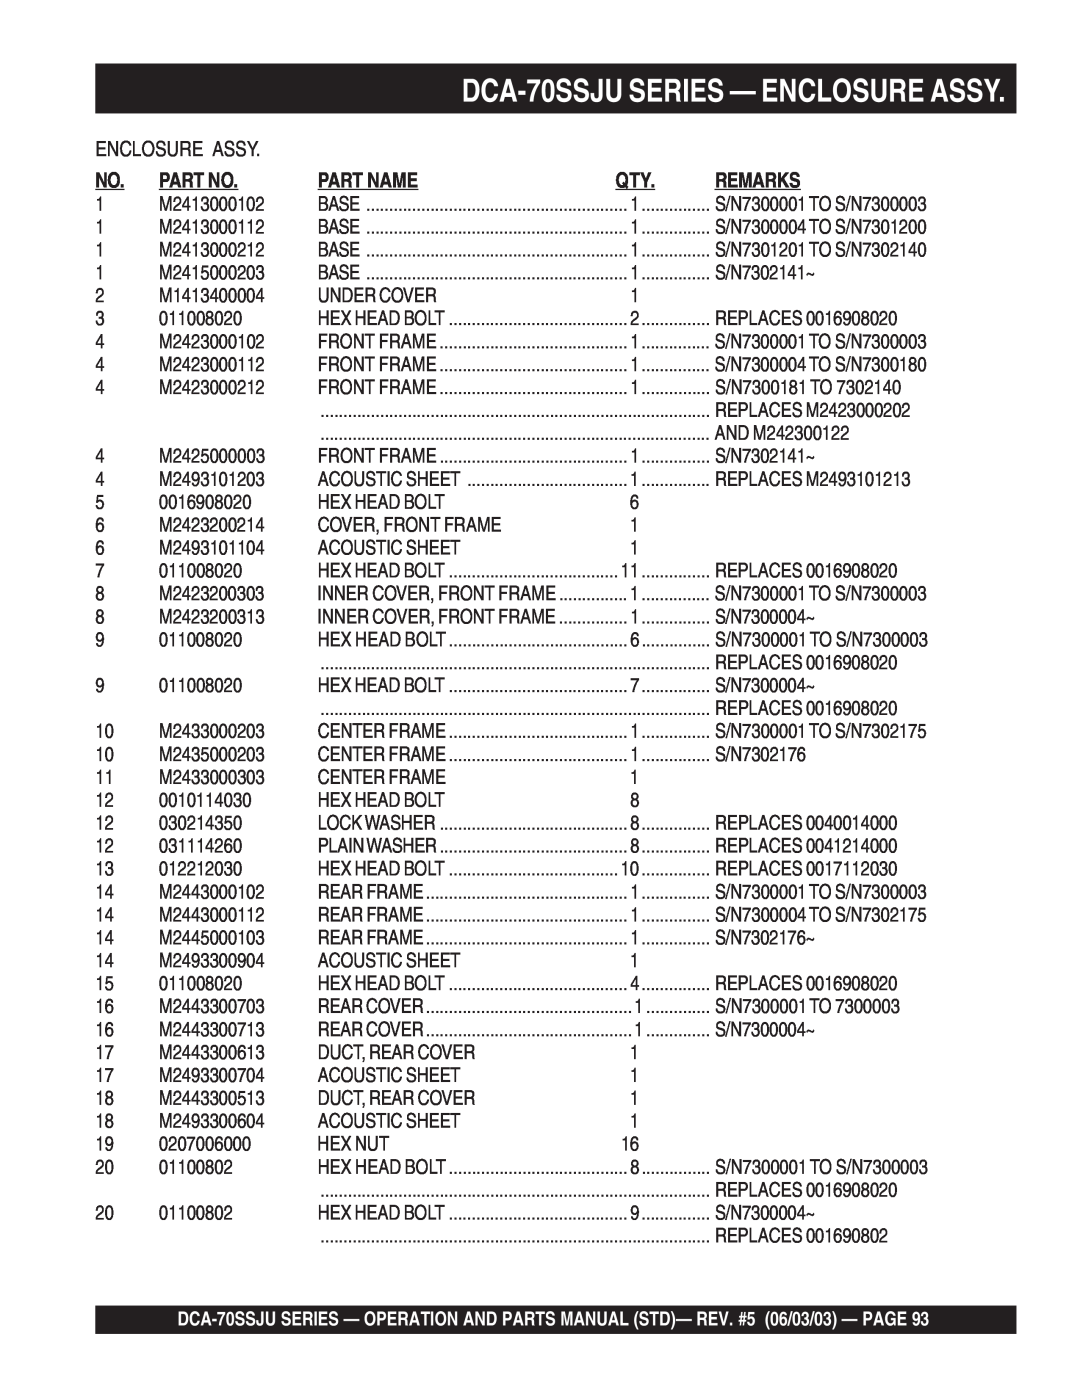 Multiquip operation manual DCA-70SSJUSERIES — ENCLOSURE ASSY, Part No, Part Name, Remarks, M2413000102 